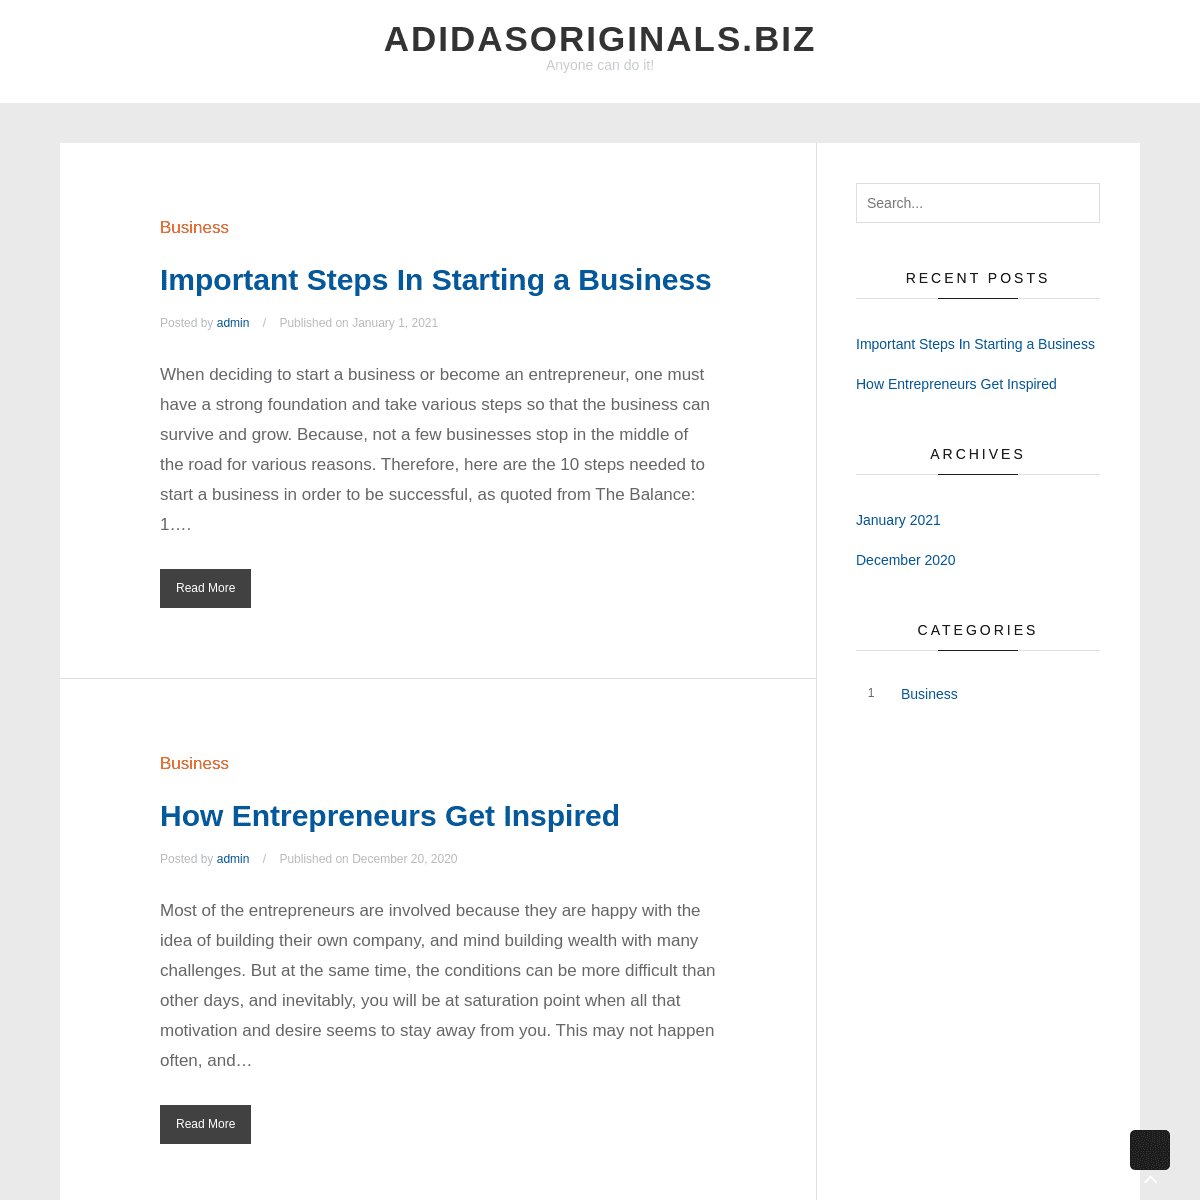 A complete backup of https://adidasoriginals.biz